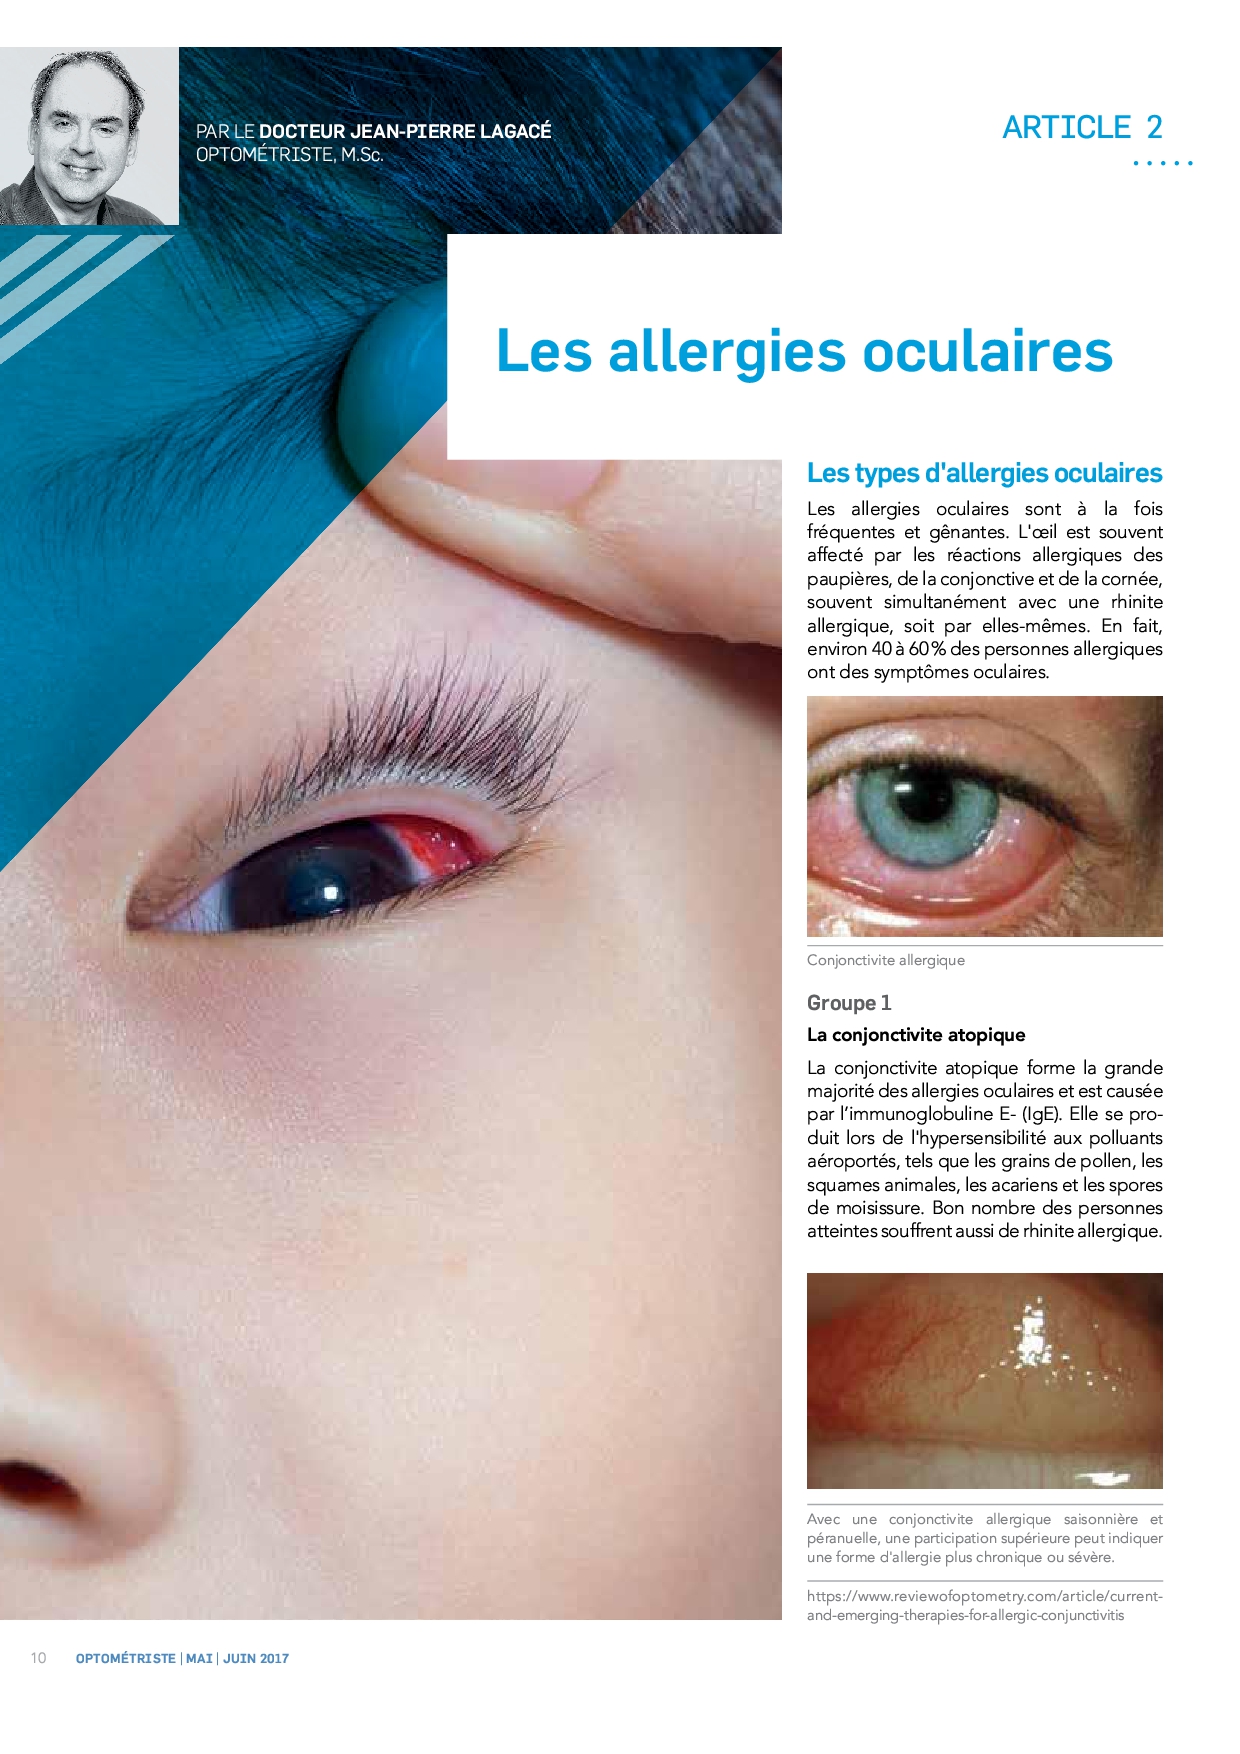 Les allergies oculaires